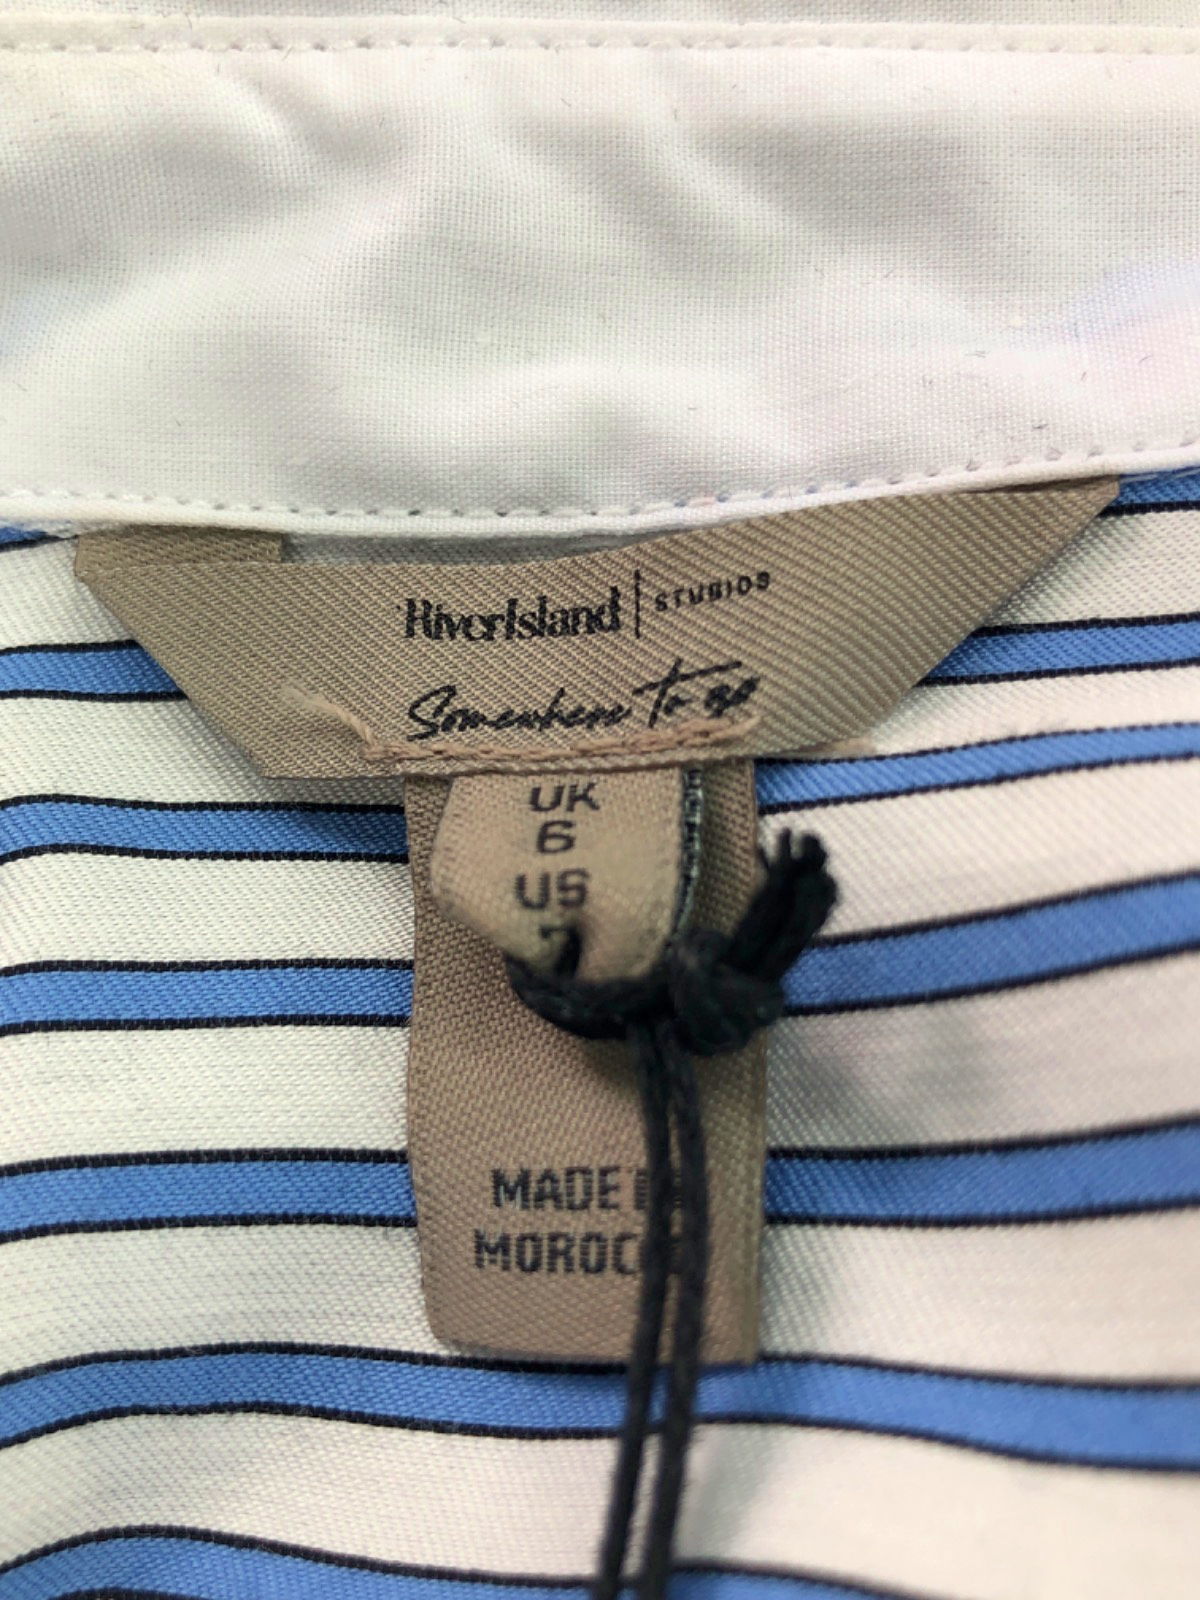 River Island Blue Striped Shirt UK 6